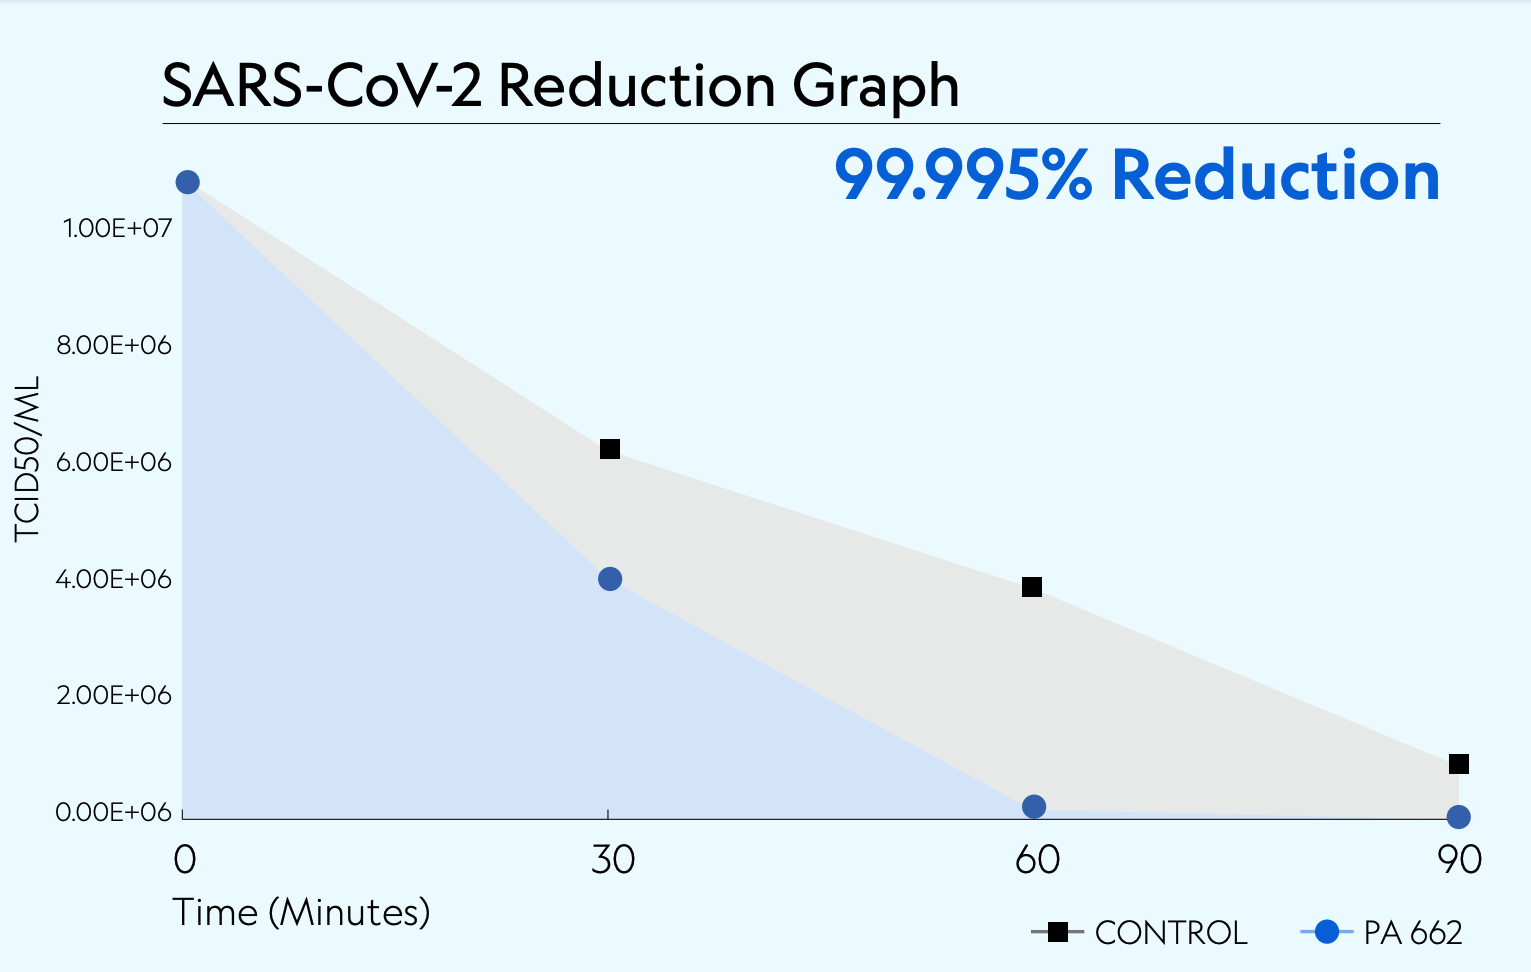 PA_662_SARS-CoV-2_Reduction_Graph.png